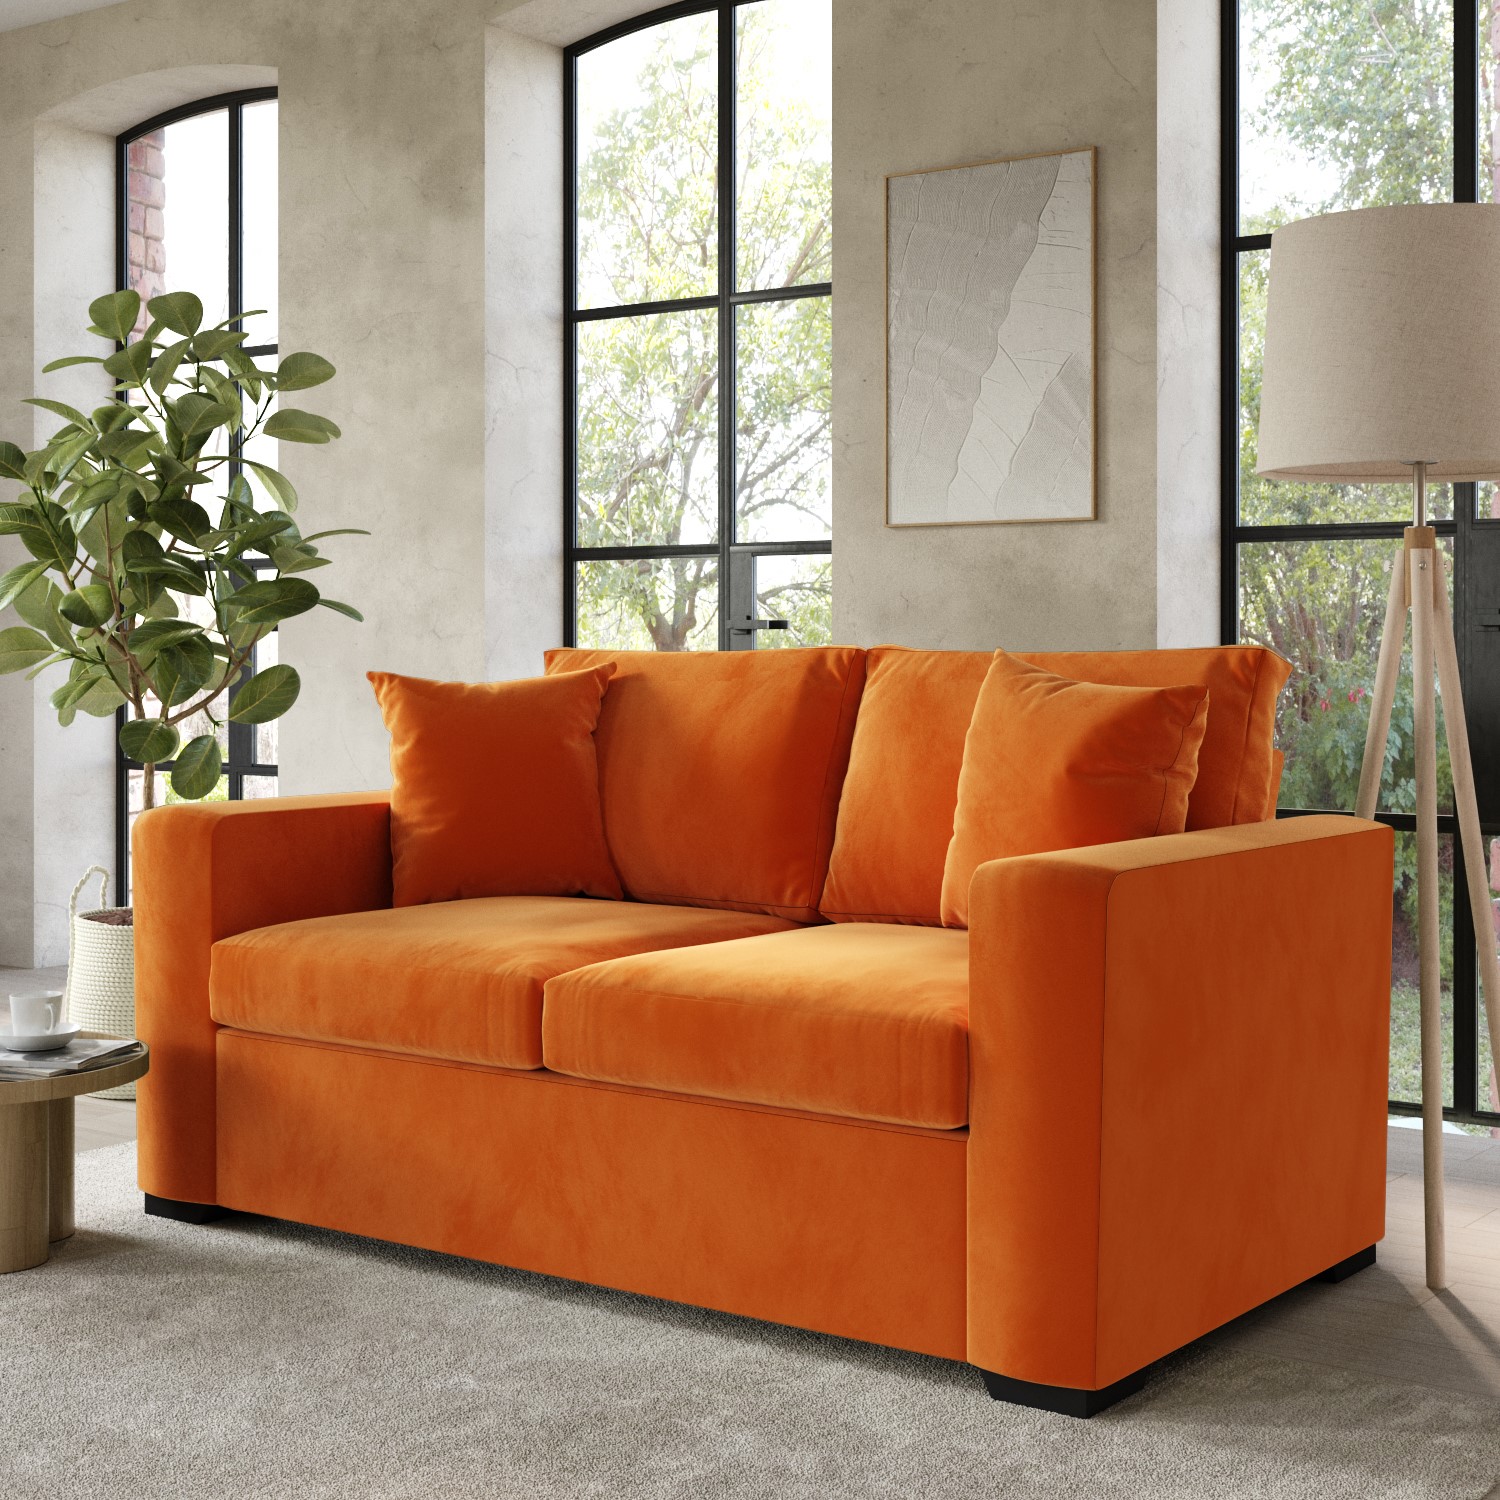 Photo of Orange velvet pull out sofa bed - seats 2 - layton